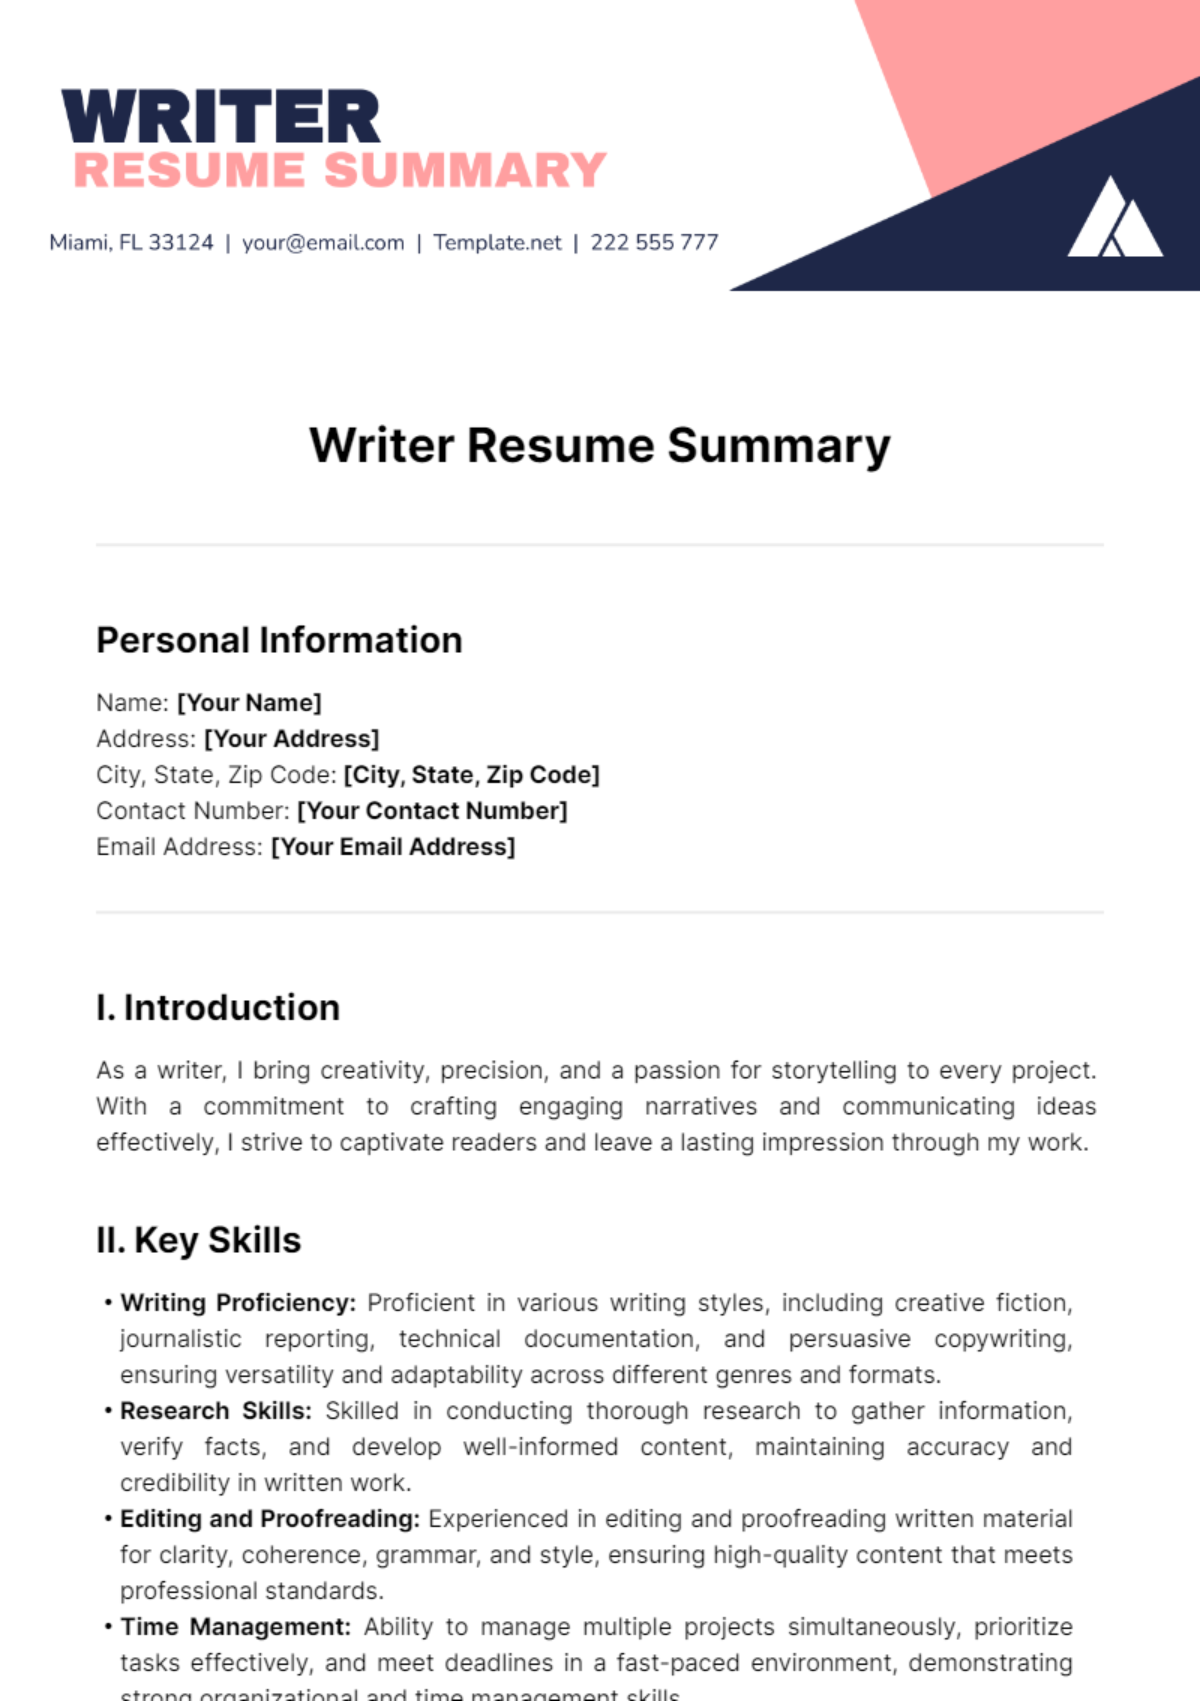 Writer Resume Summary Template